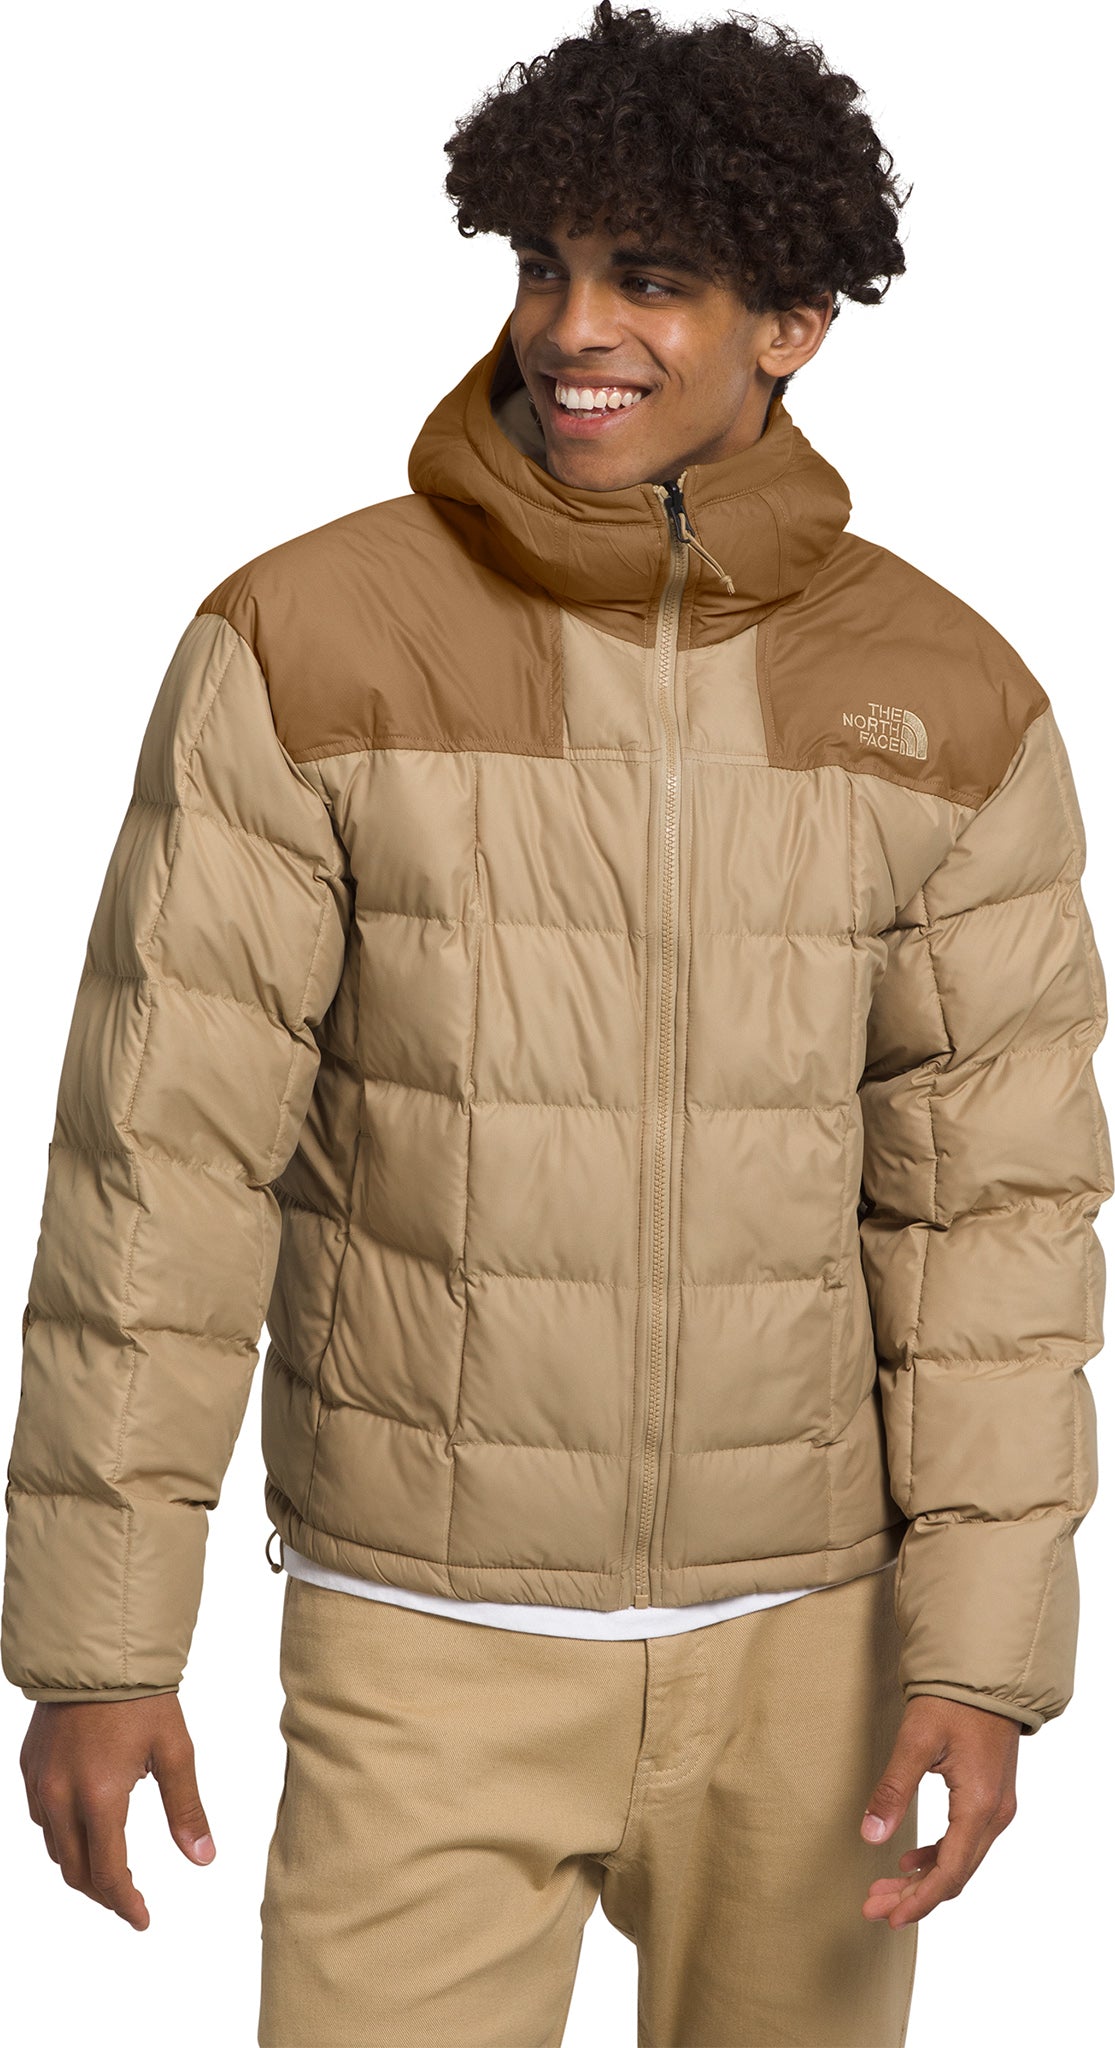 Lhotse reversible jacket, The North Face